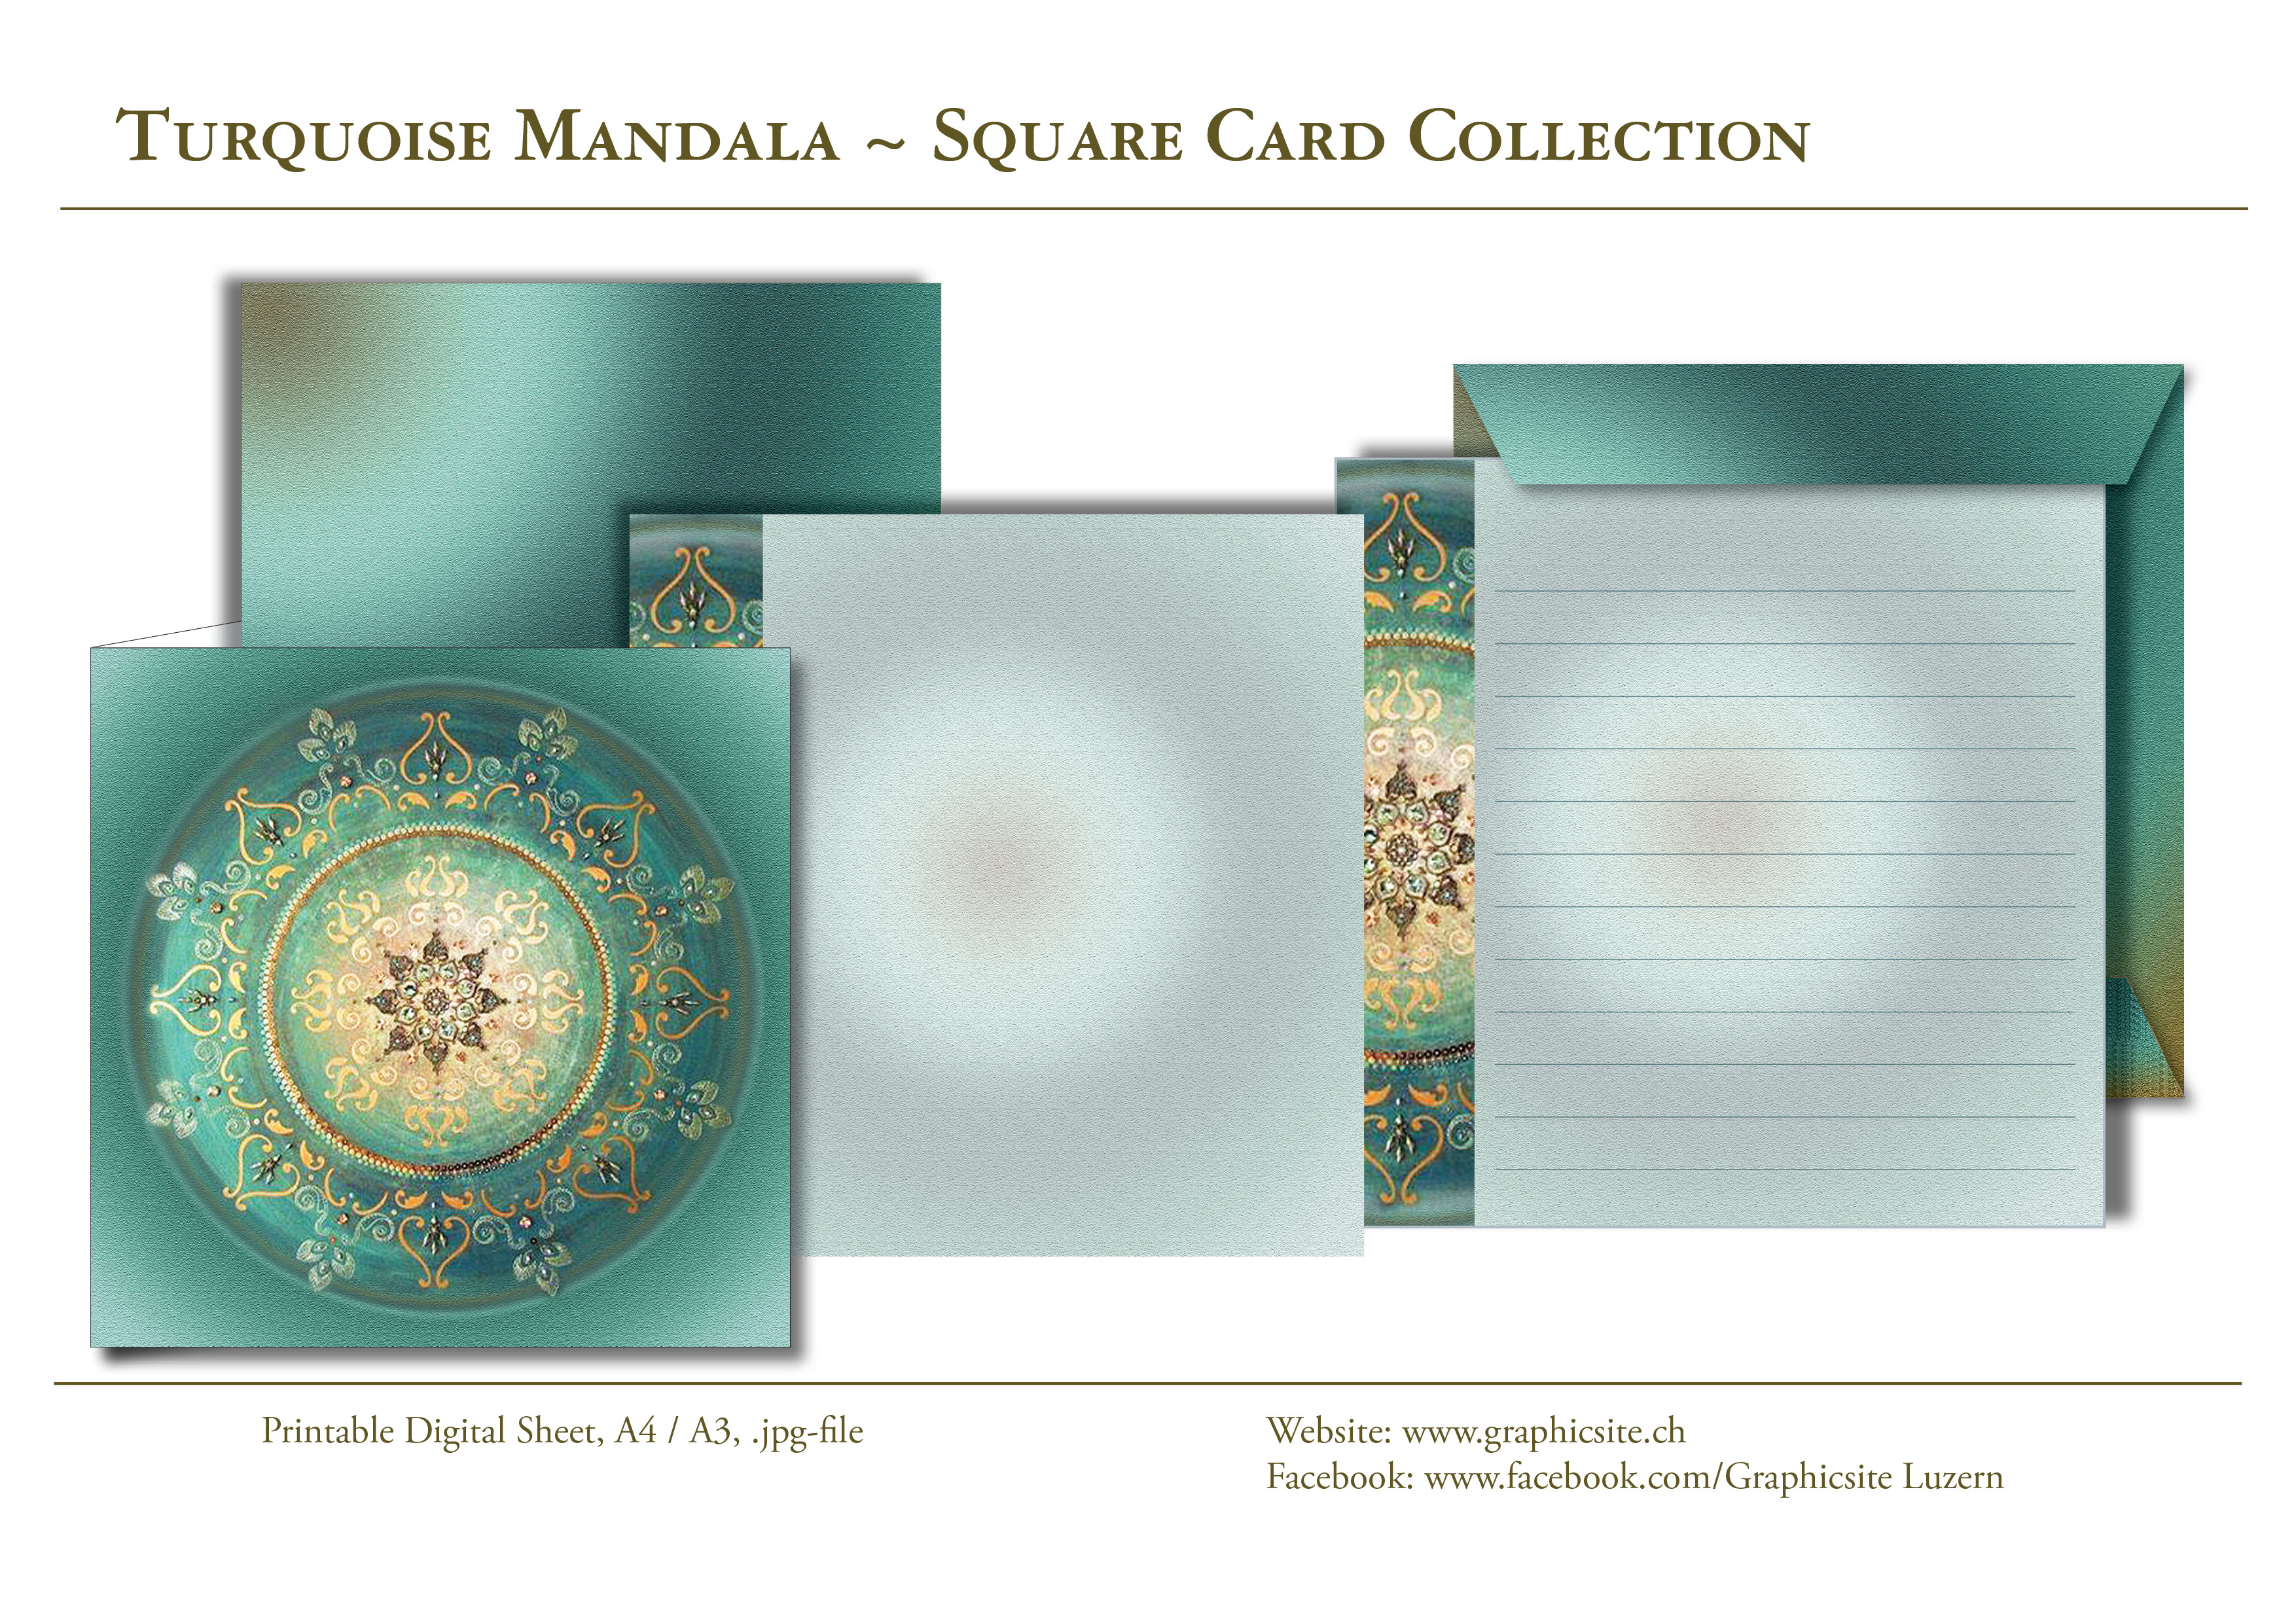 Karten selber drucken - Mandala Turquoise - Karten, Grusskarten, Kuvert, Grafiker Luzern, Schweiz